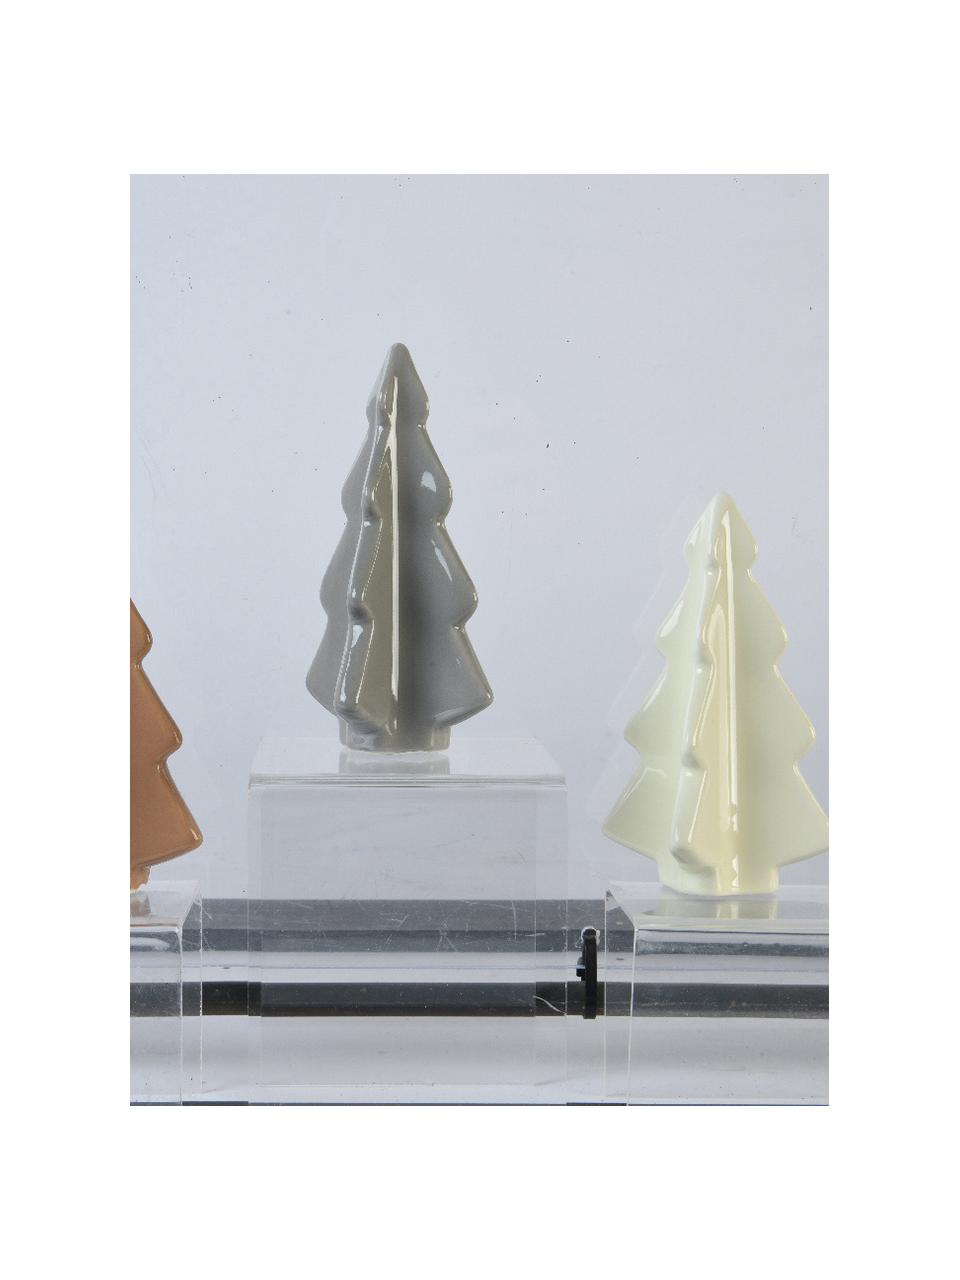 Porzellan-Deko-Bäume Dash, 3er-Set, Porzellan, Braun, Dunkelgrau, Off White, B 5 x H 12 cm